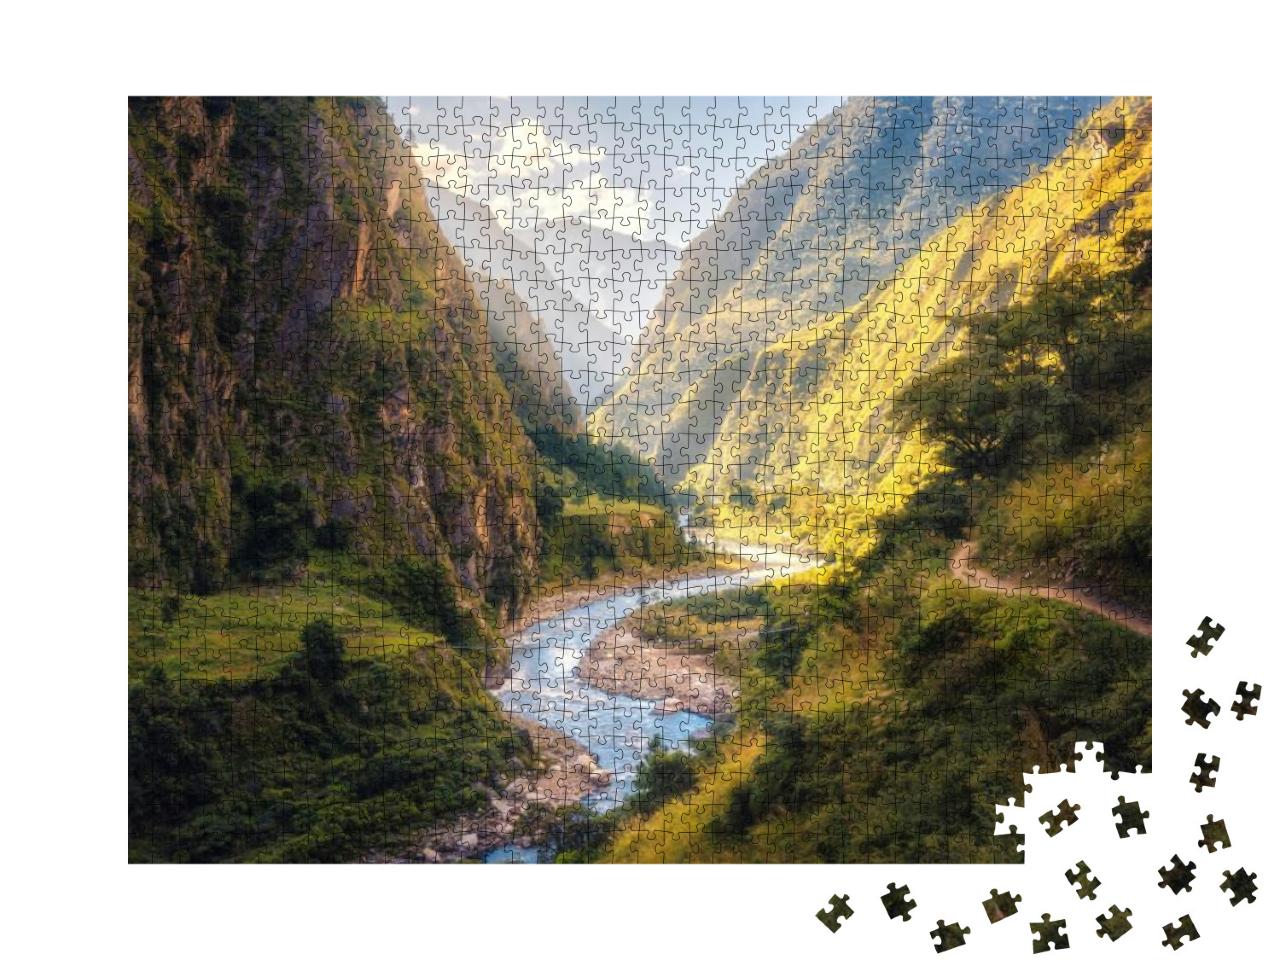 Puzzle 1000 Teile „Wunderschönes Tal vor den Himalaya-Bergen“